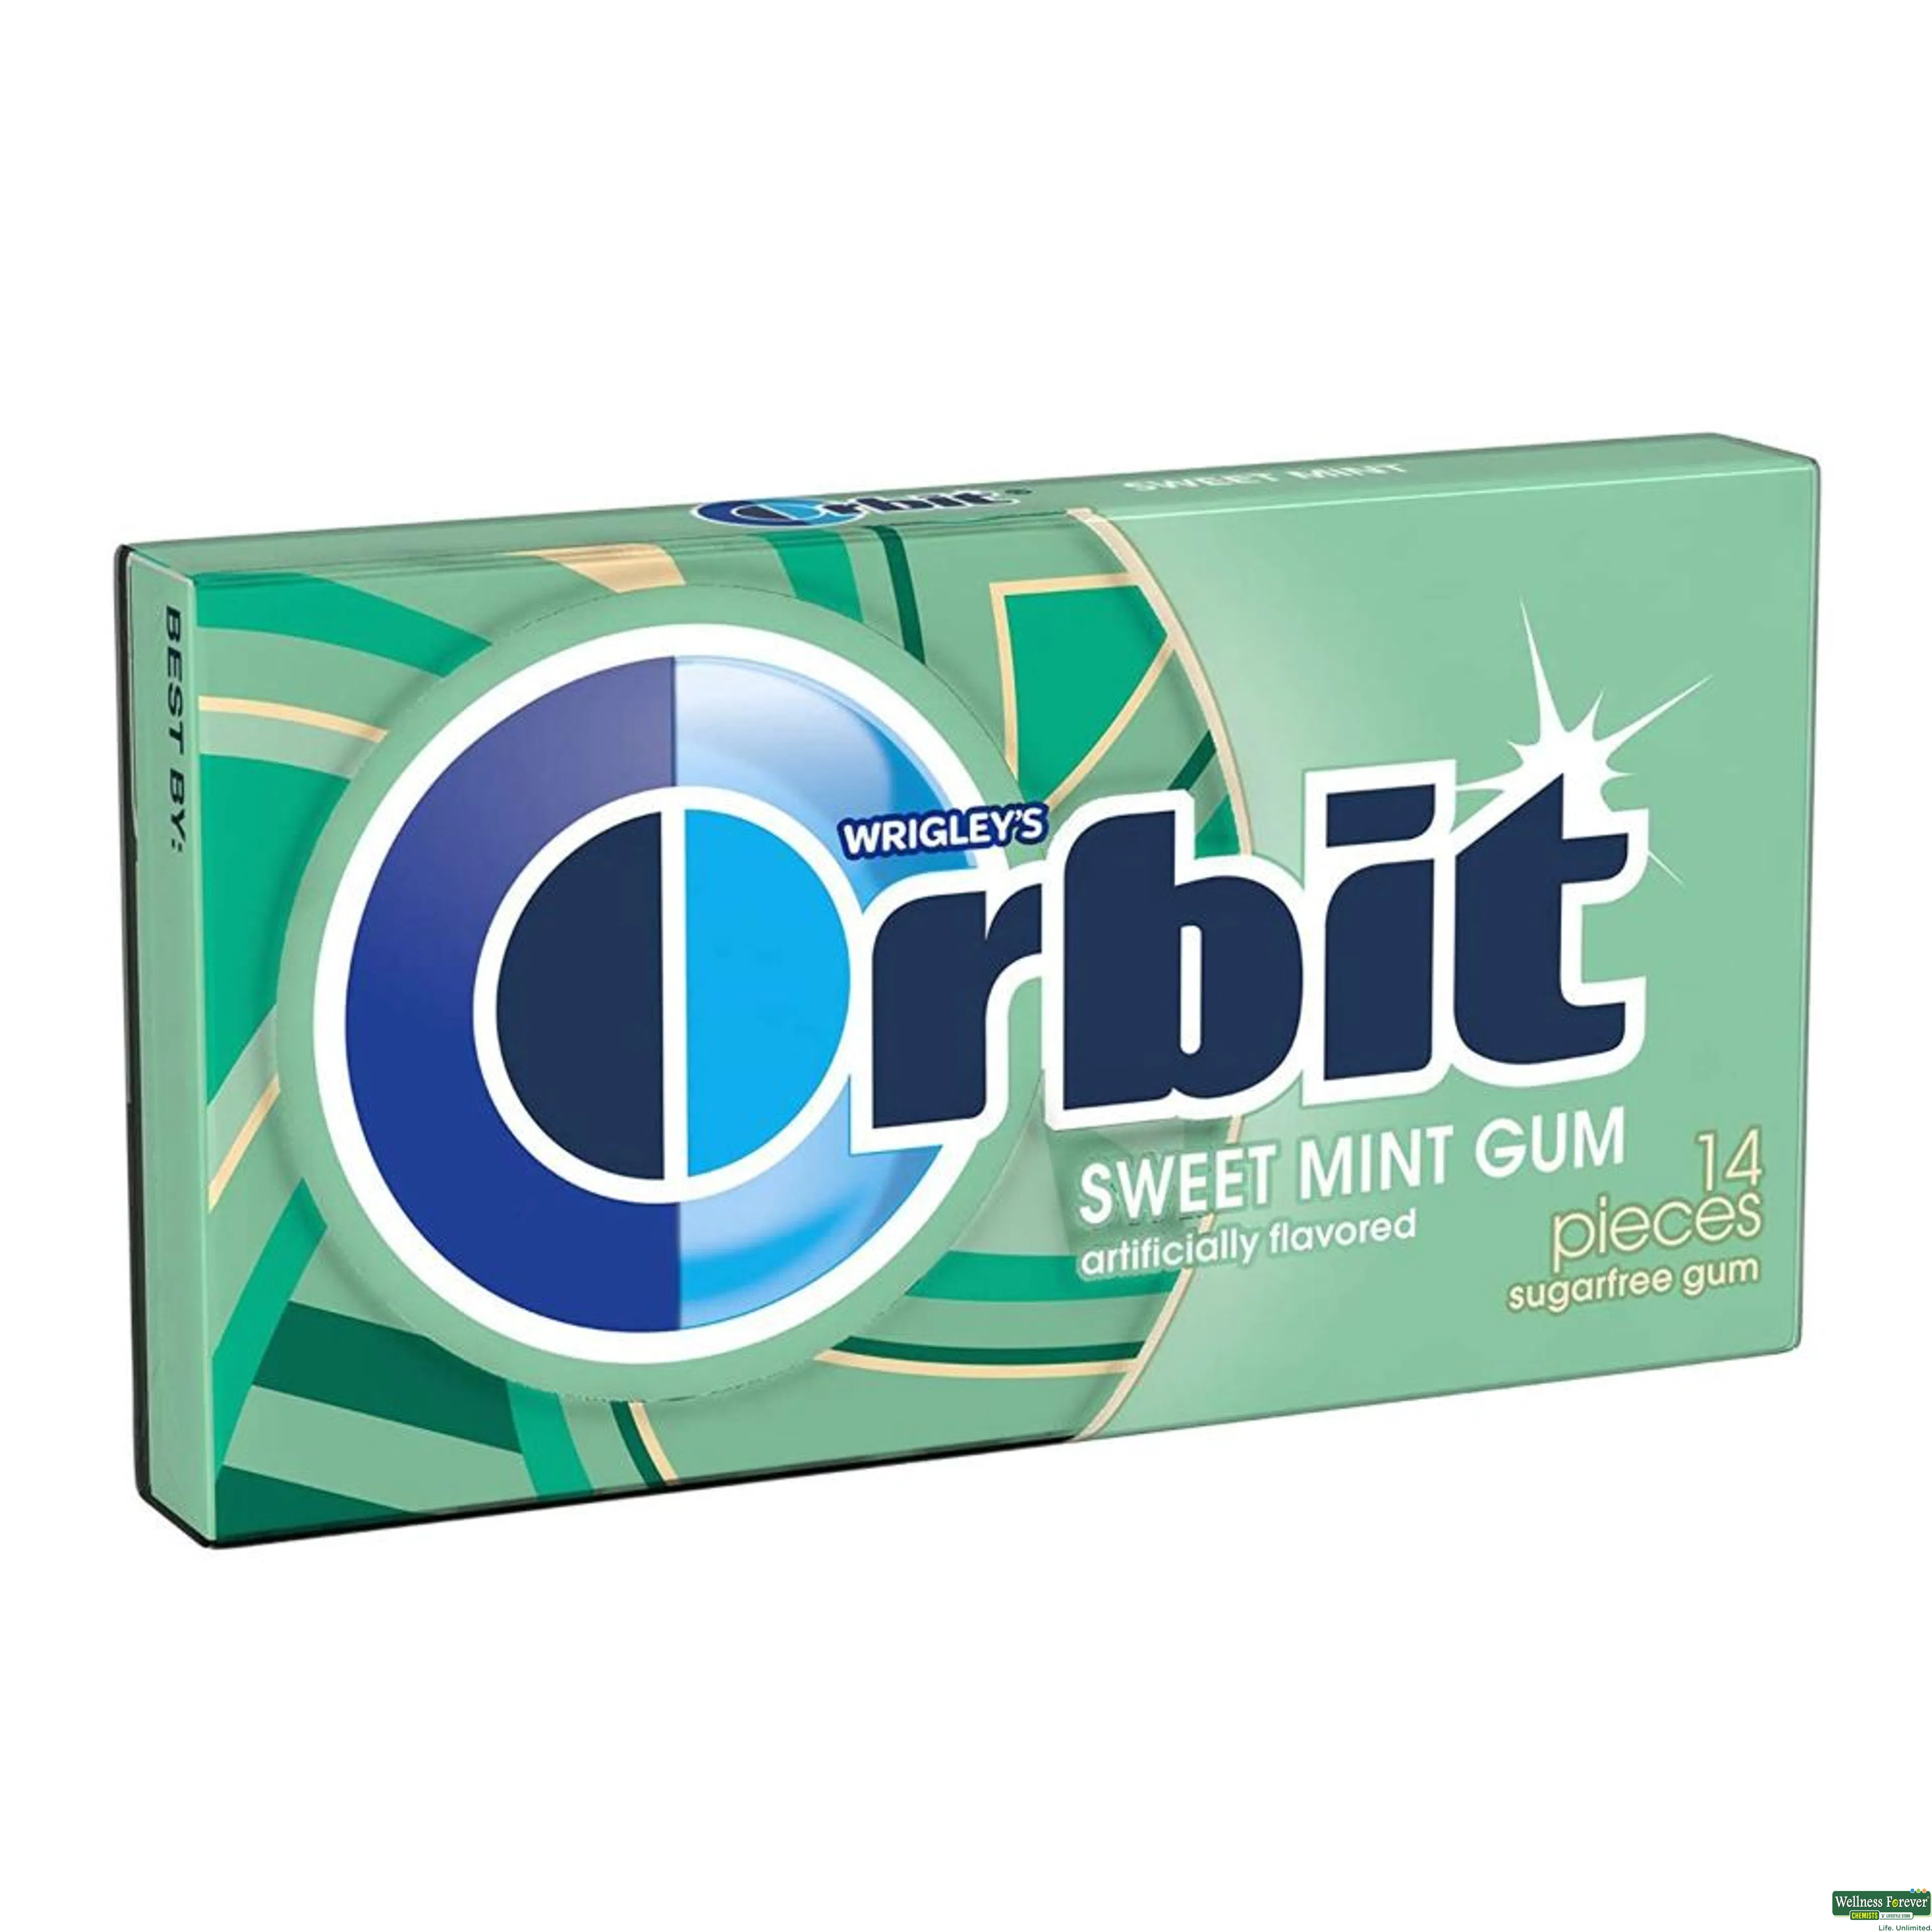 ORBIT CHEW GUM S/F SWEET MINT 14PC-image